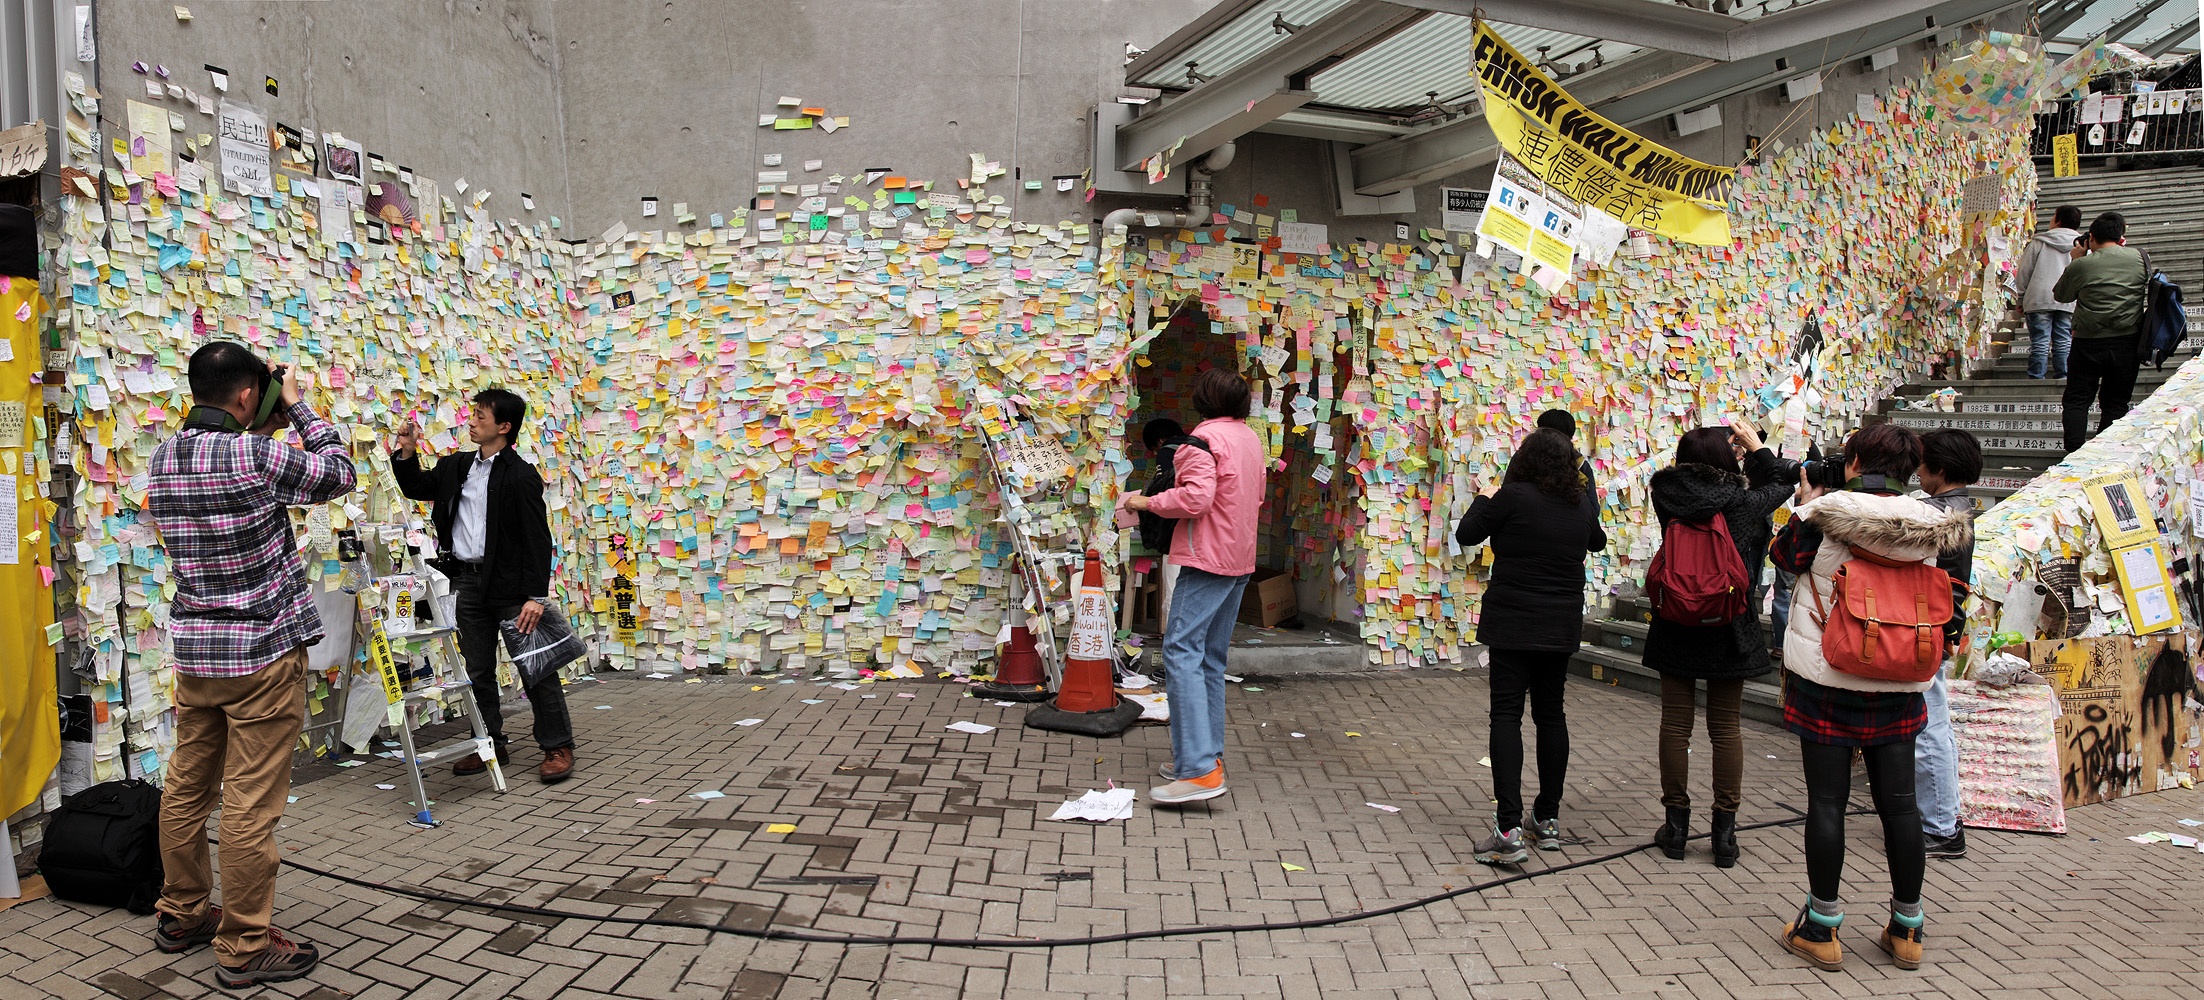 bill-hocker-lennon-wall-umbrella-square-admiralty-hong-kong-2014